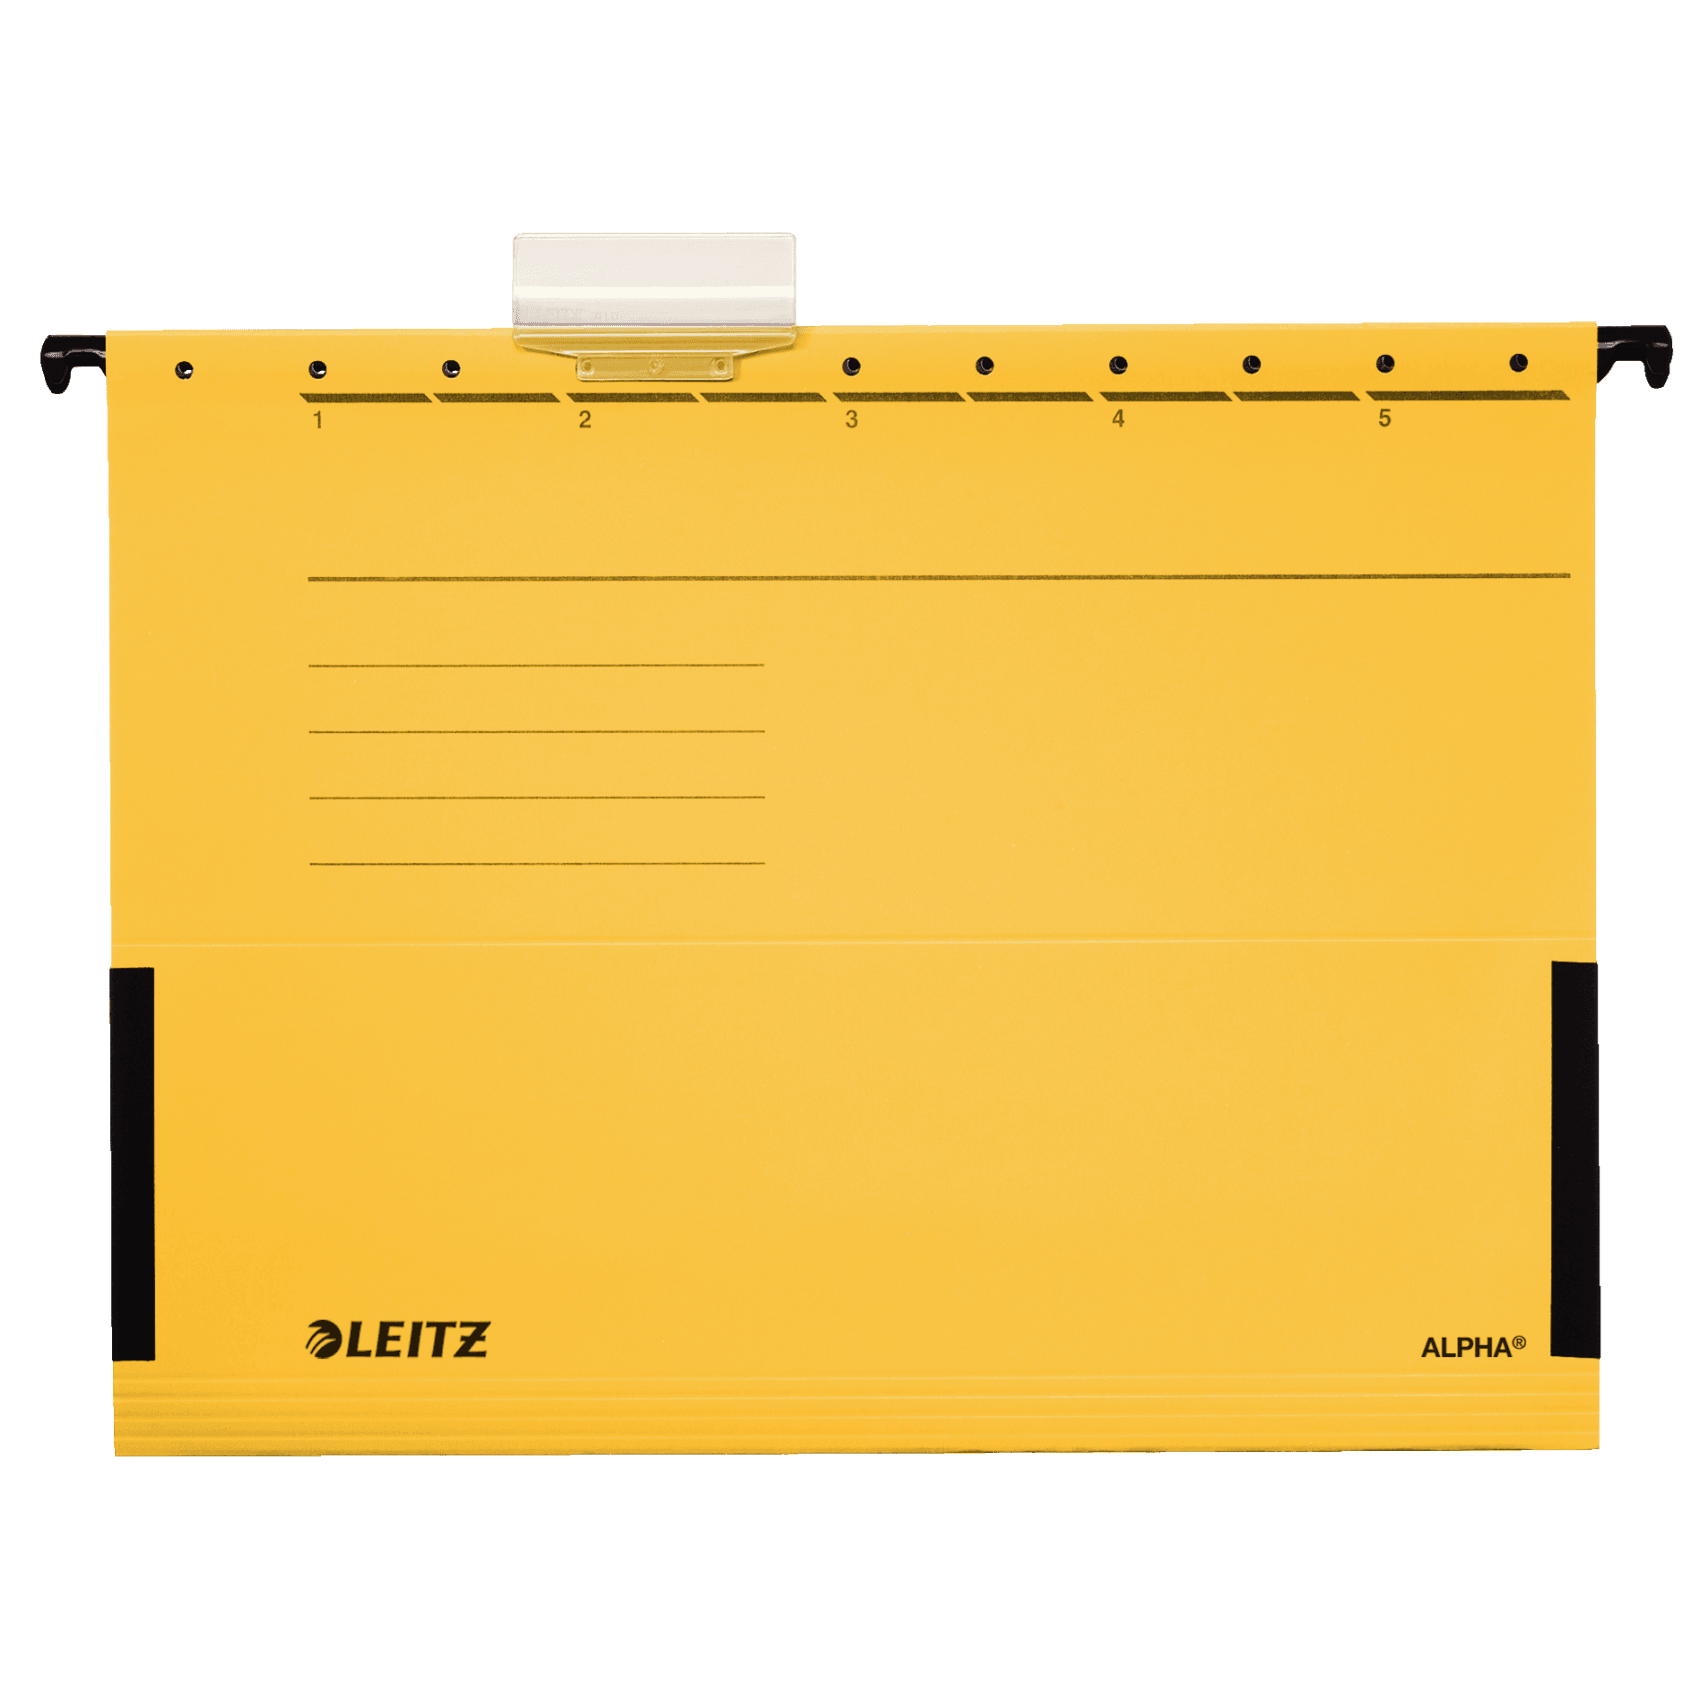 Závěsné desky Leitz ALPHA s bočnicemi, žluté